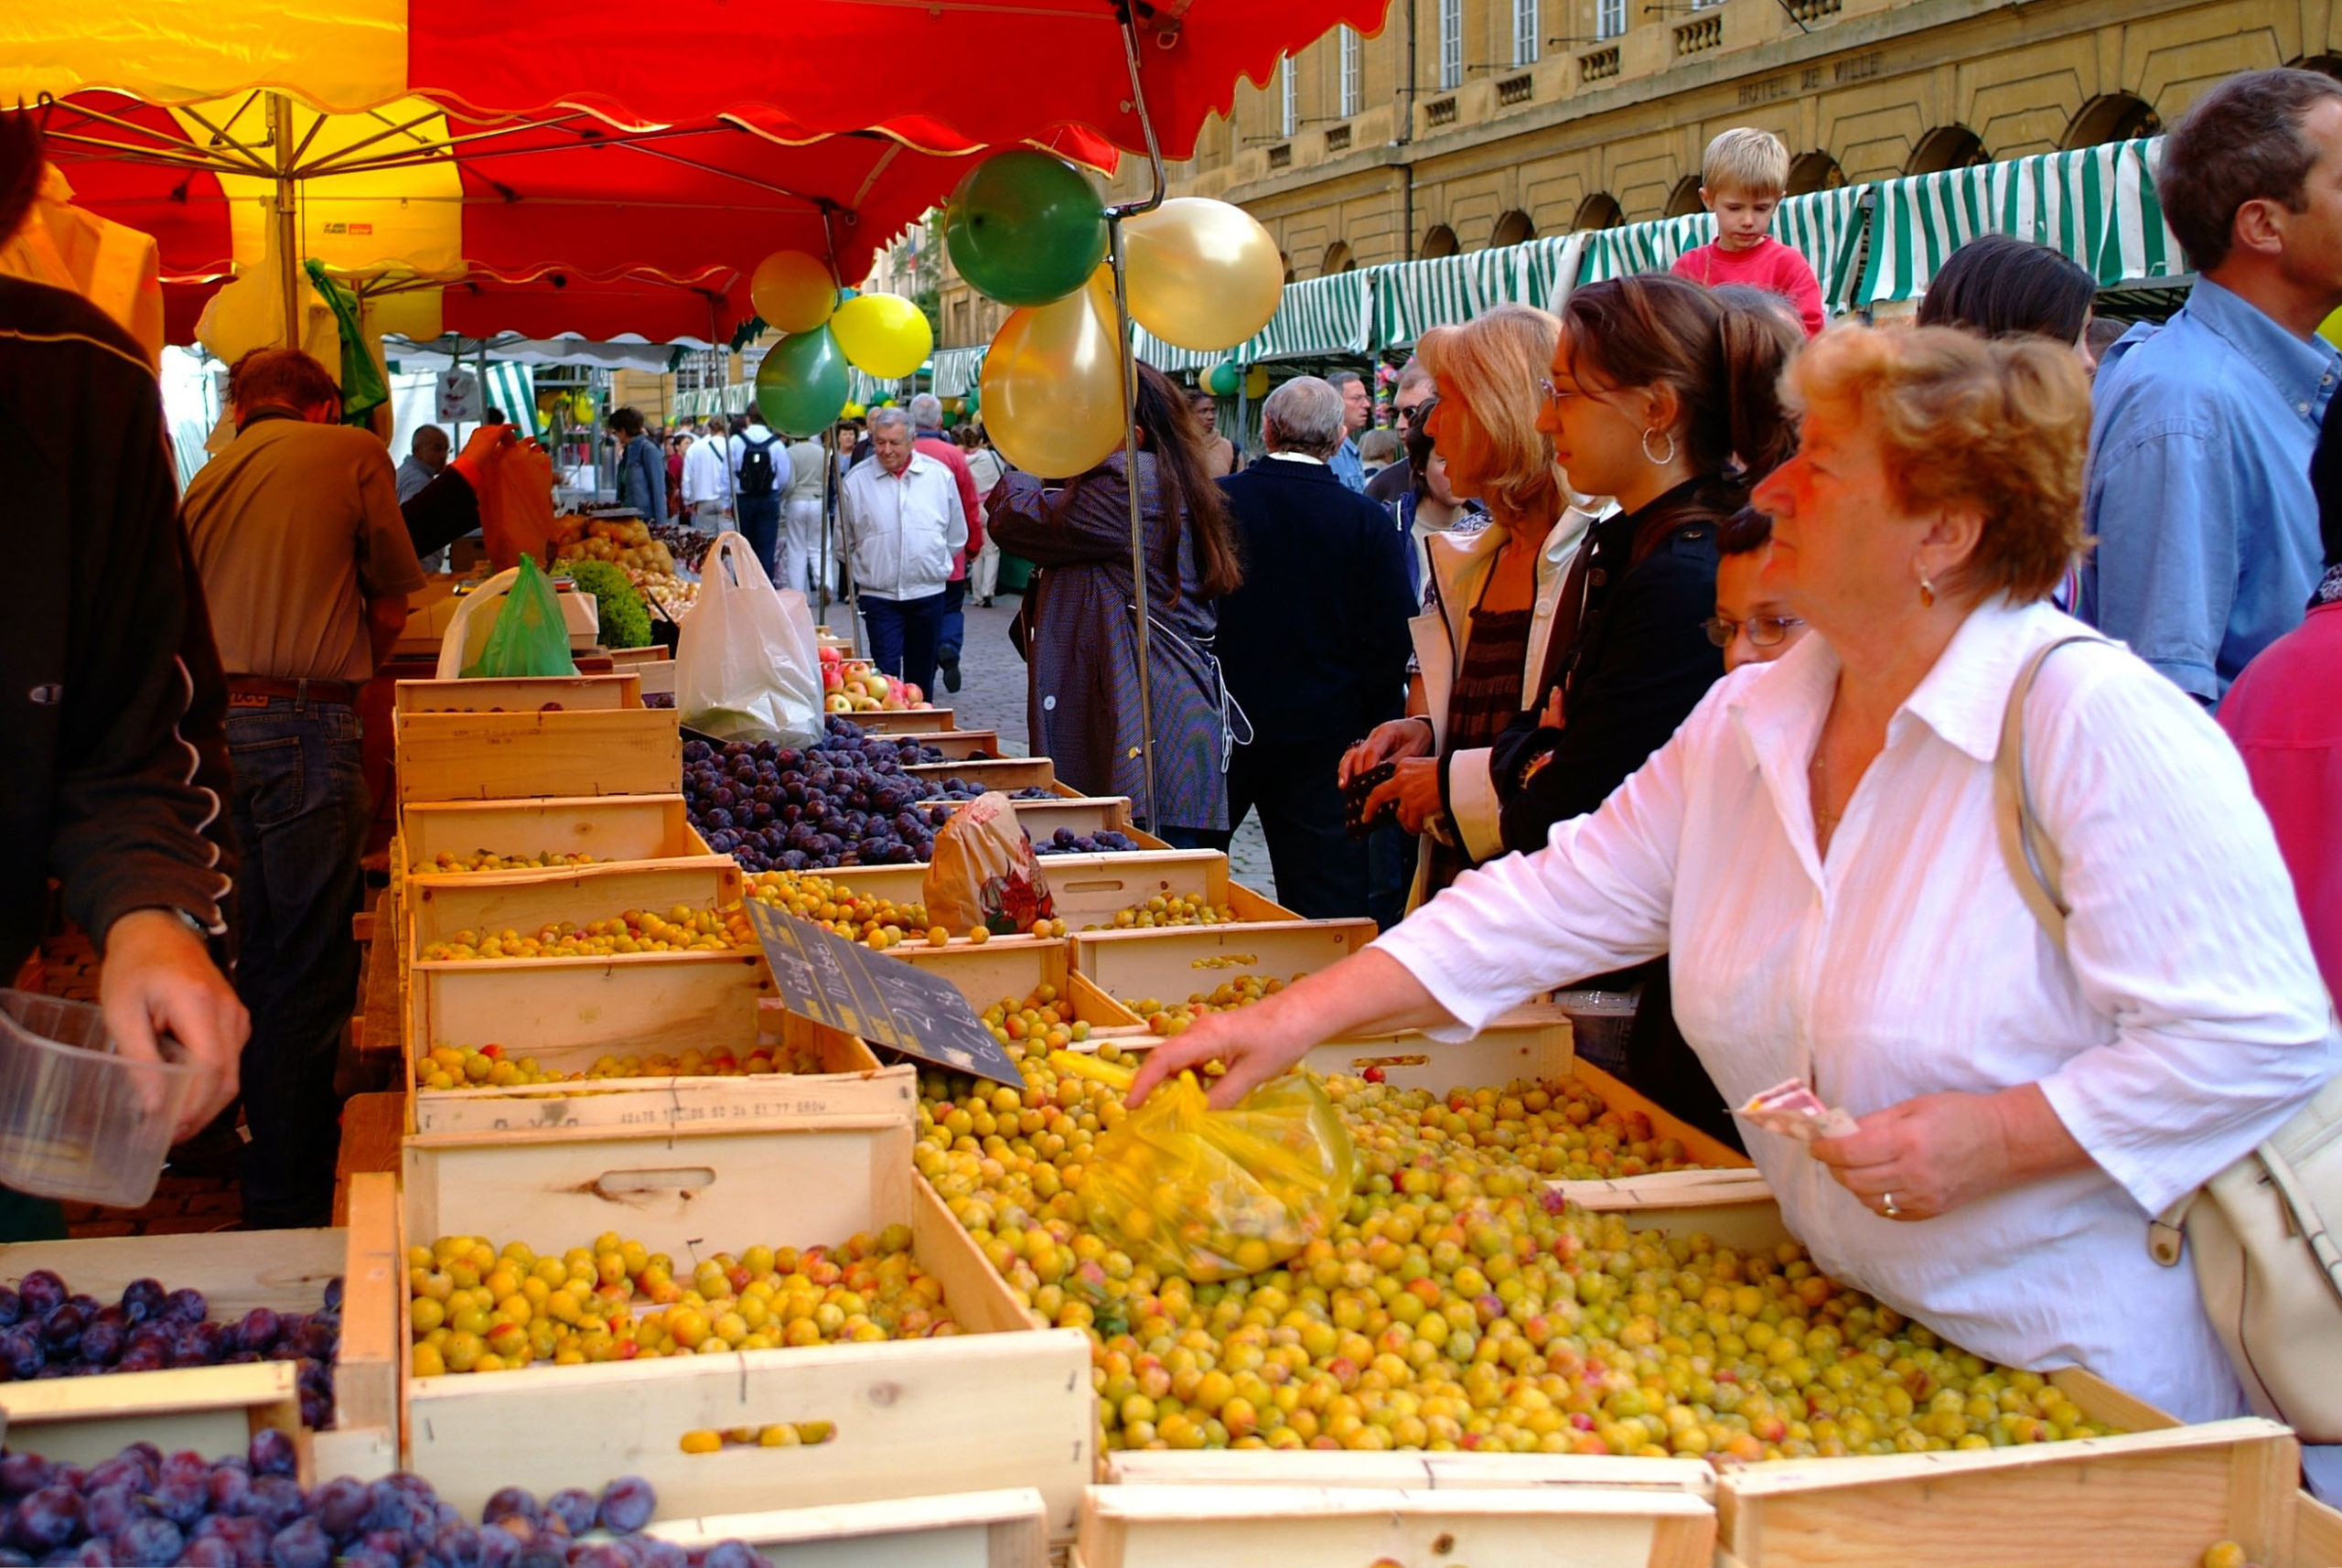 Mirabelle of Lorraine in a market of Metz © OTC Metz - Christian Legay